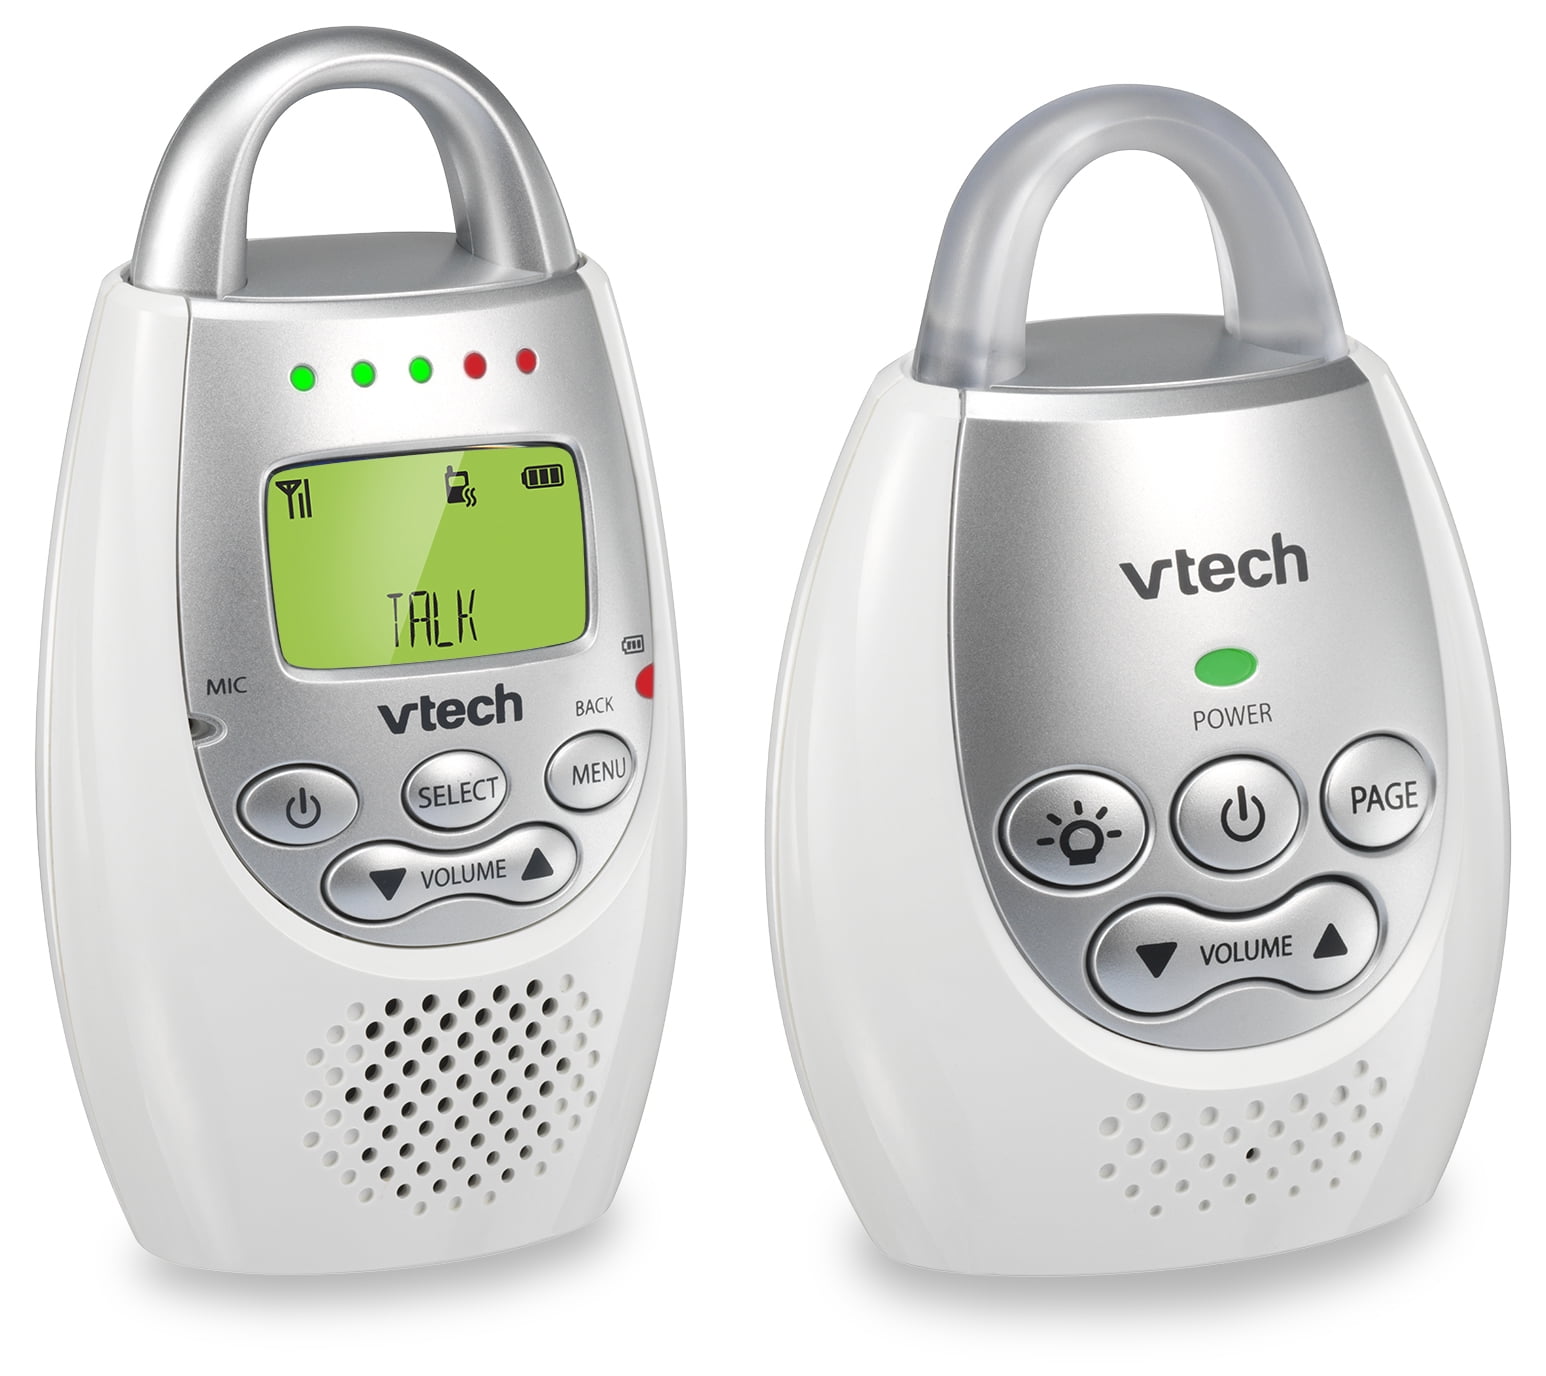 Vtech Safe & Sound Digital Audio Baby Monitor 2 Way Talk DECT 6.0 DM221 White 